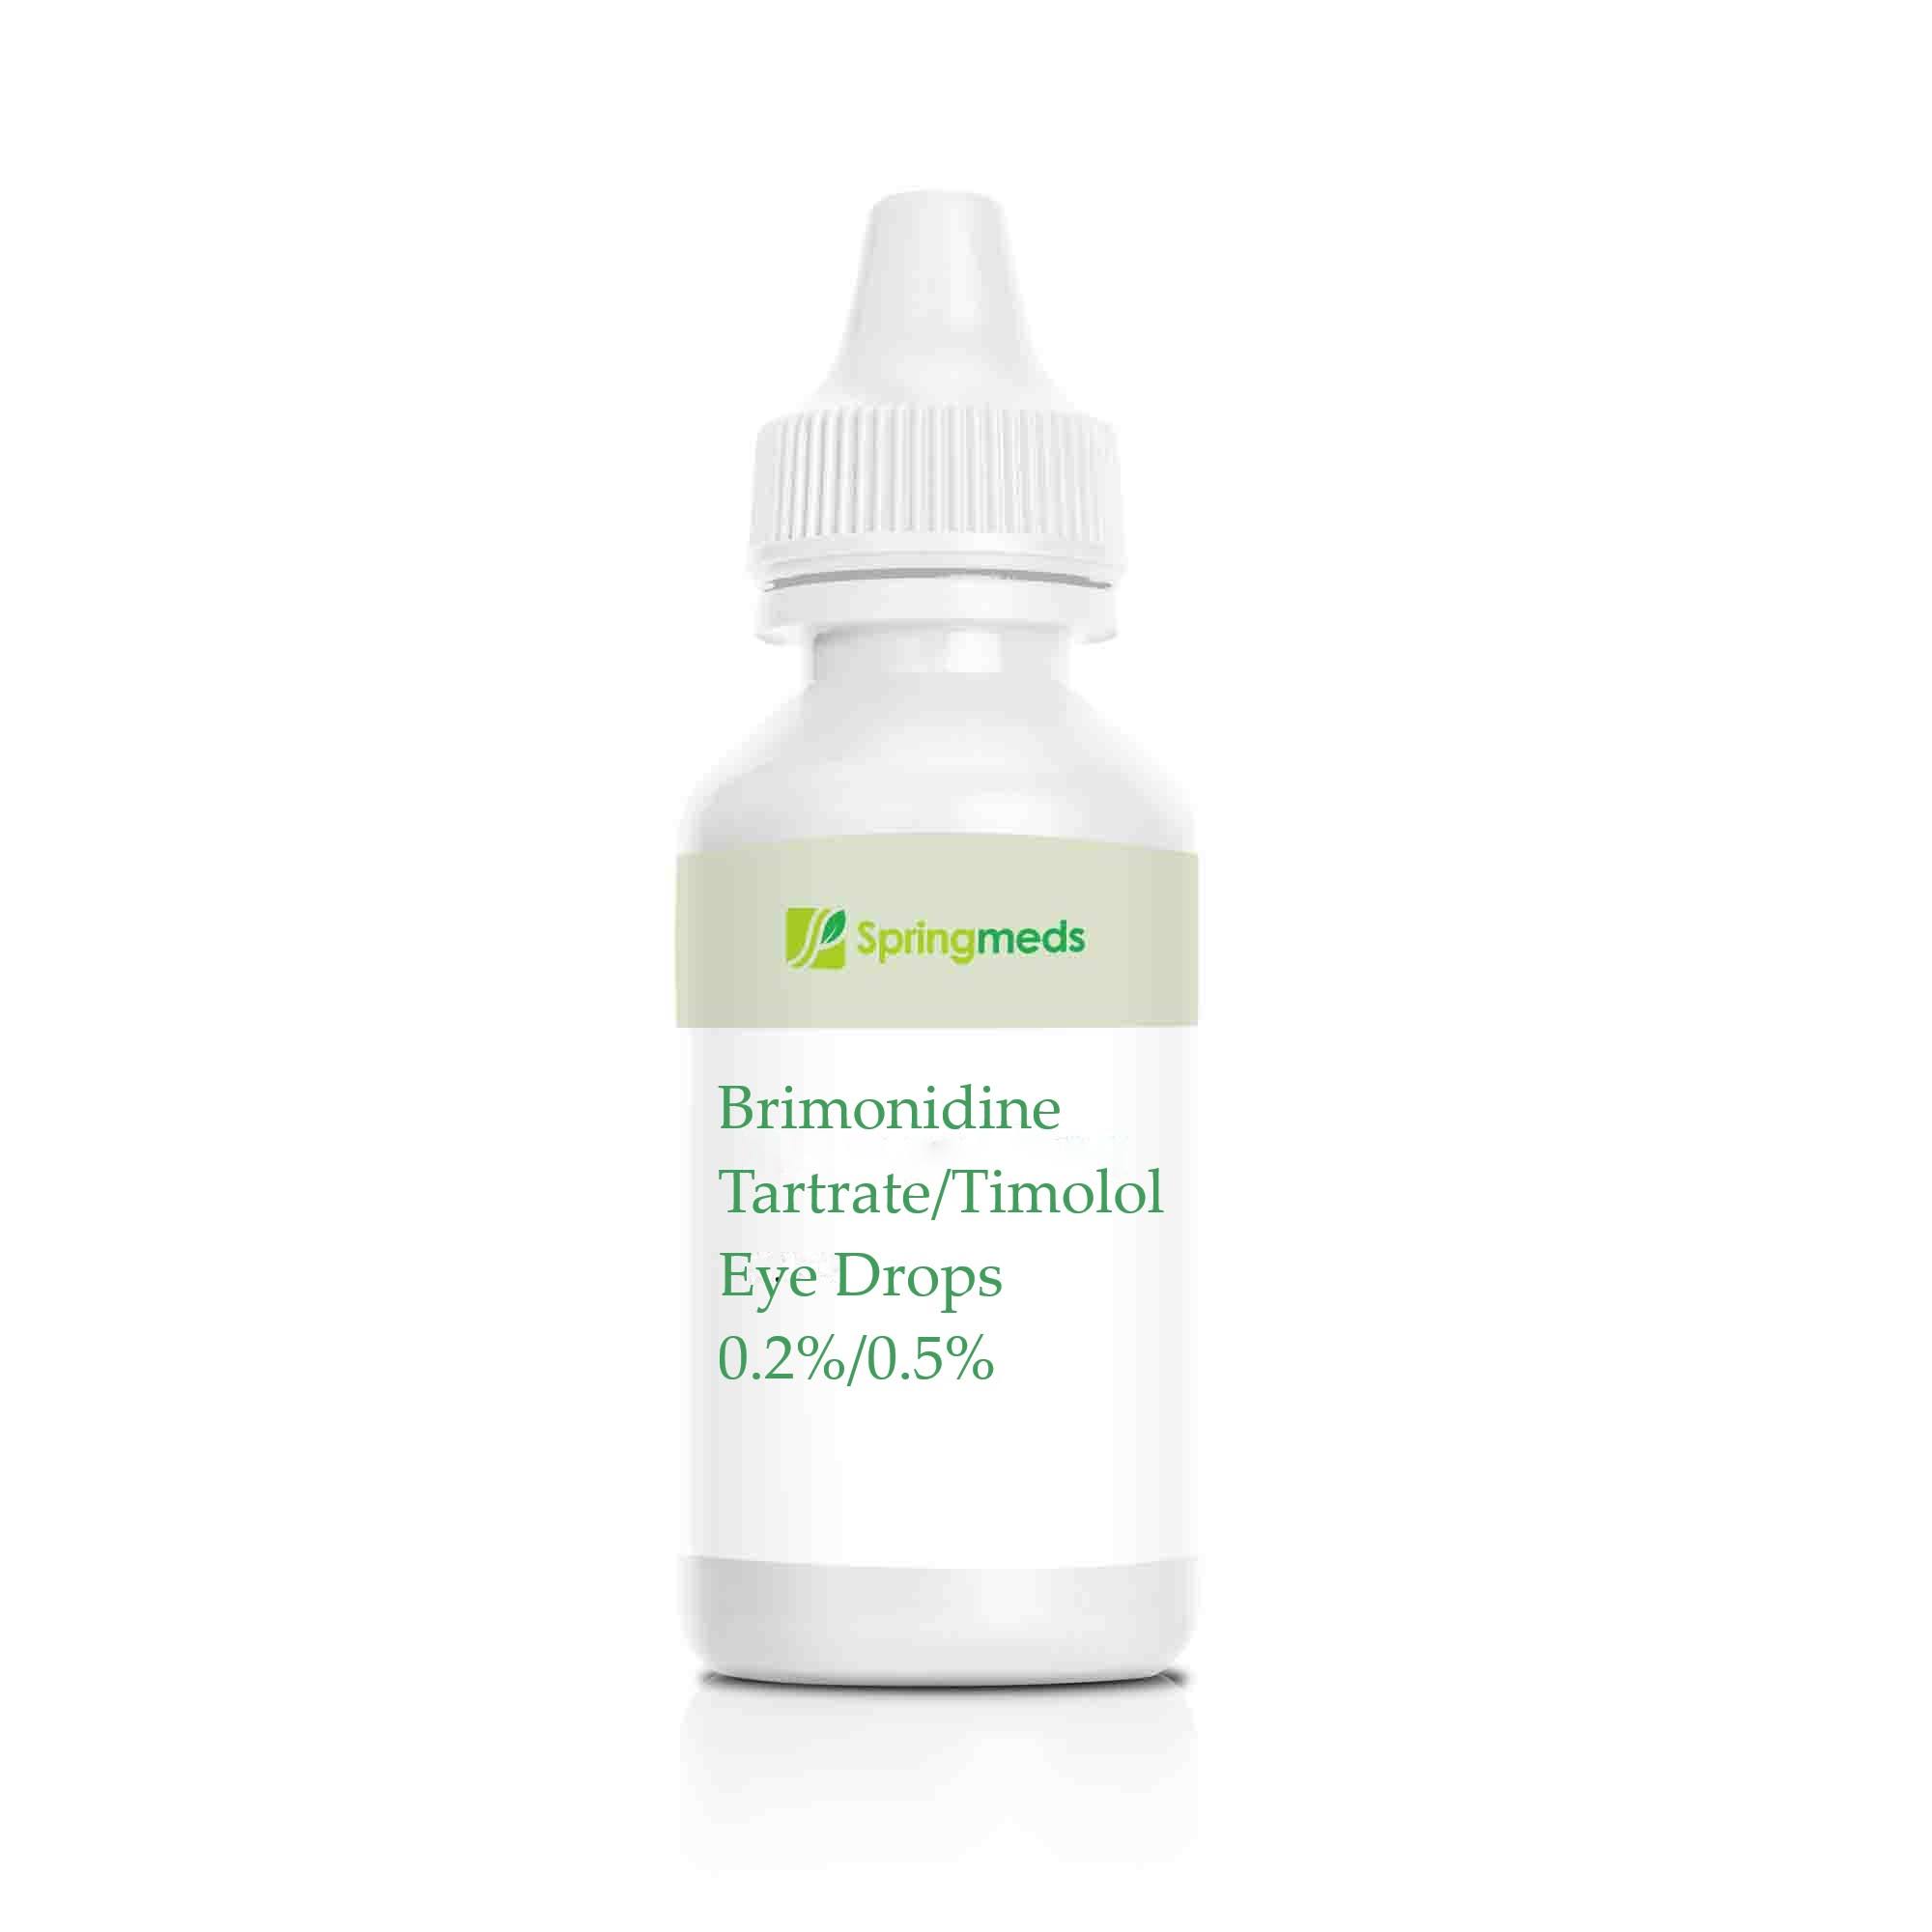 Brimonidine Tartrate/Timolol Eye Drops (10ml bottle) 0.2%/0.5% 10.0 Eye Drops (generic Equivalent to Combigan Eye Drops)